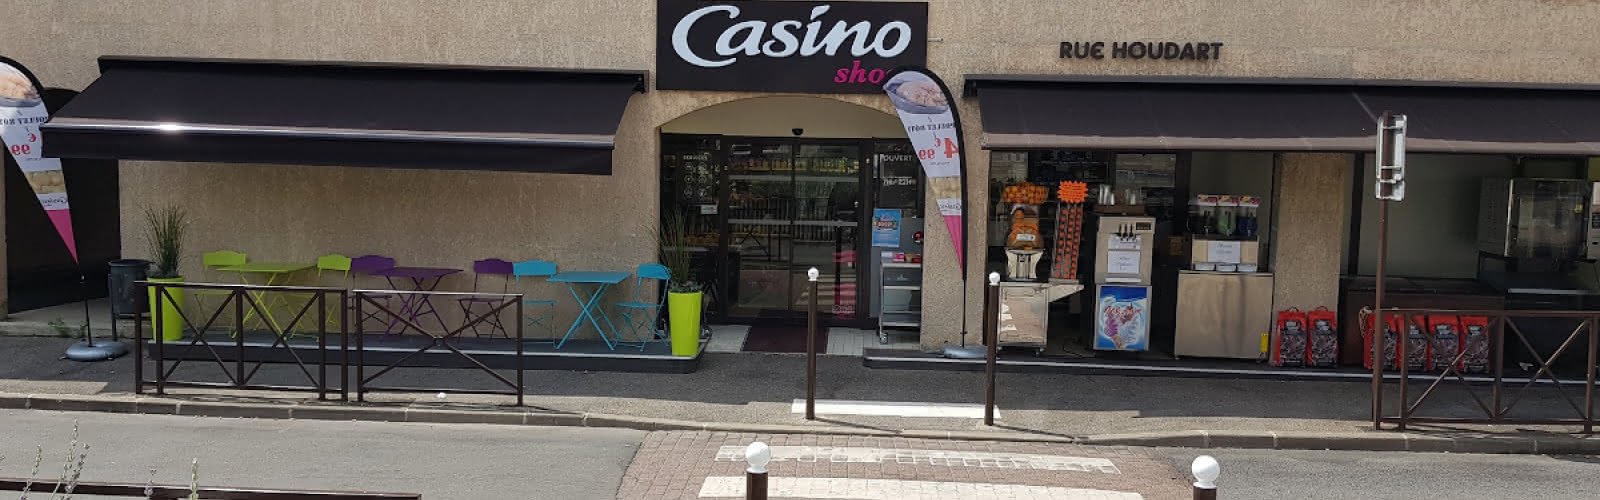 Casino Shop, Roissy-en-France